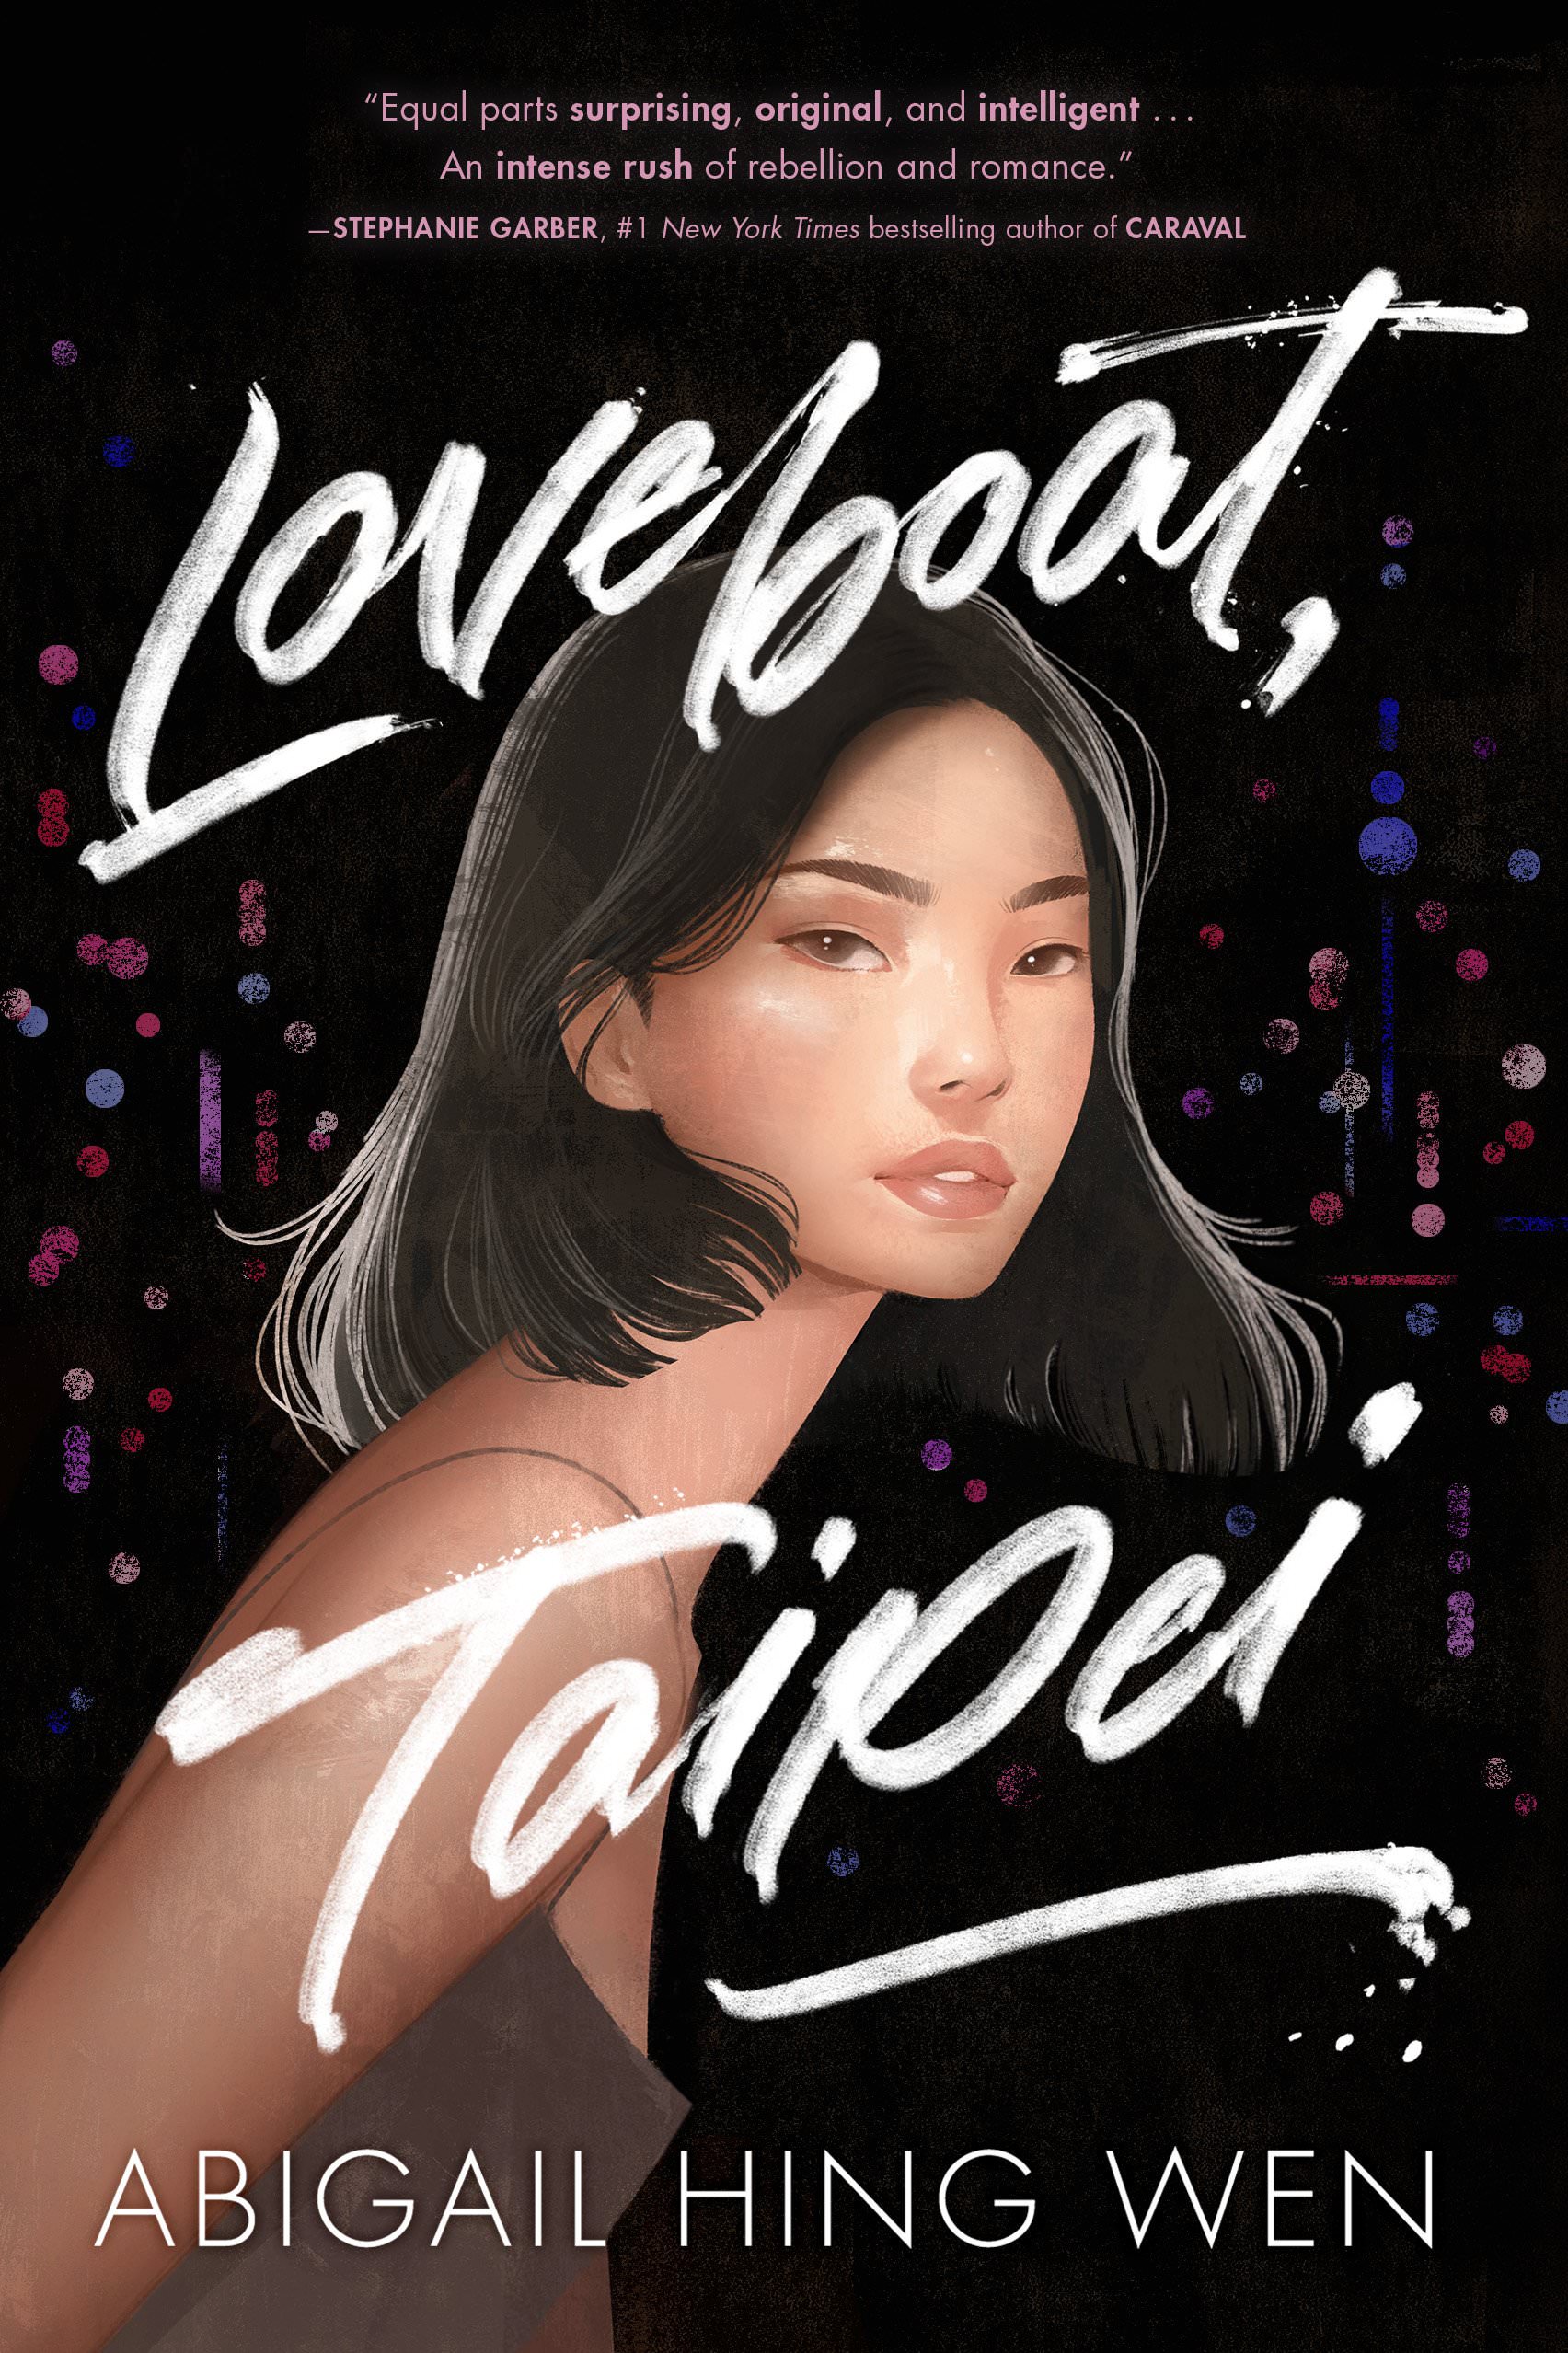 Loveboat Taipei by Abigail Hing Wen